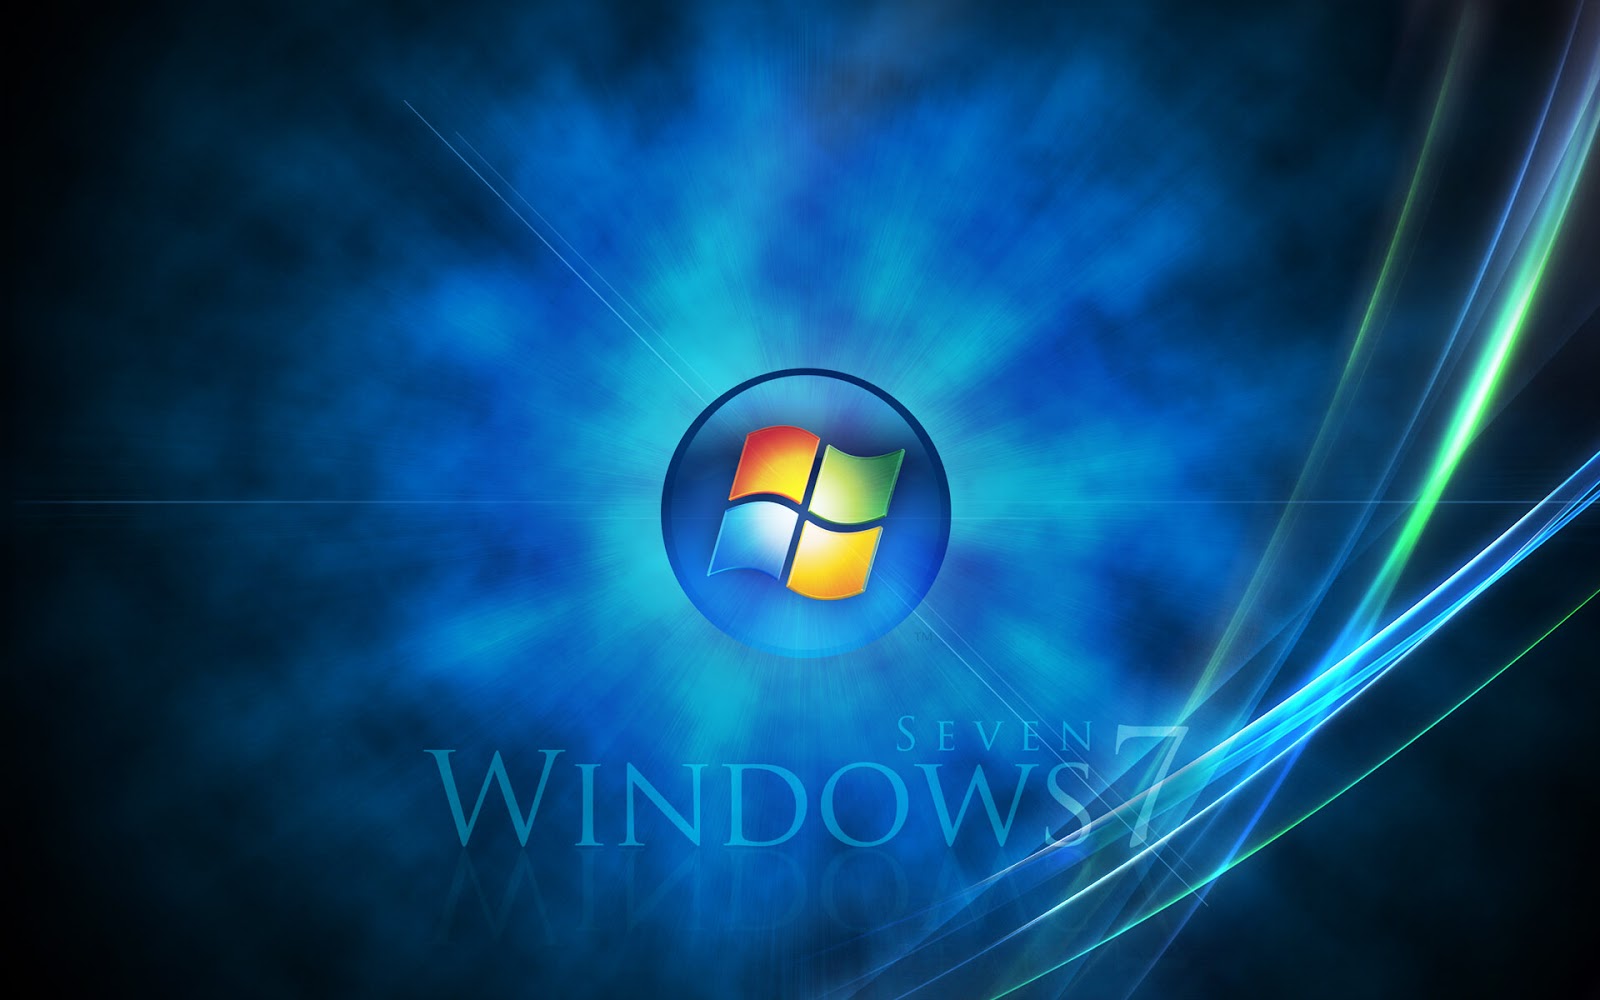 Huge List Of Windows Basic Premium Professional Ultimate Many